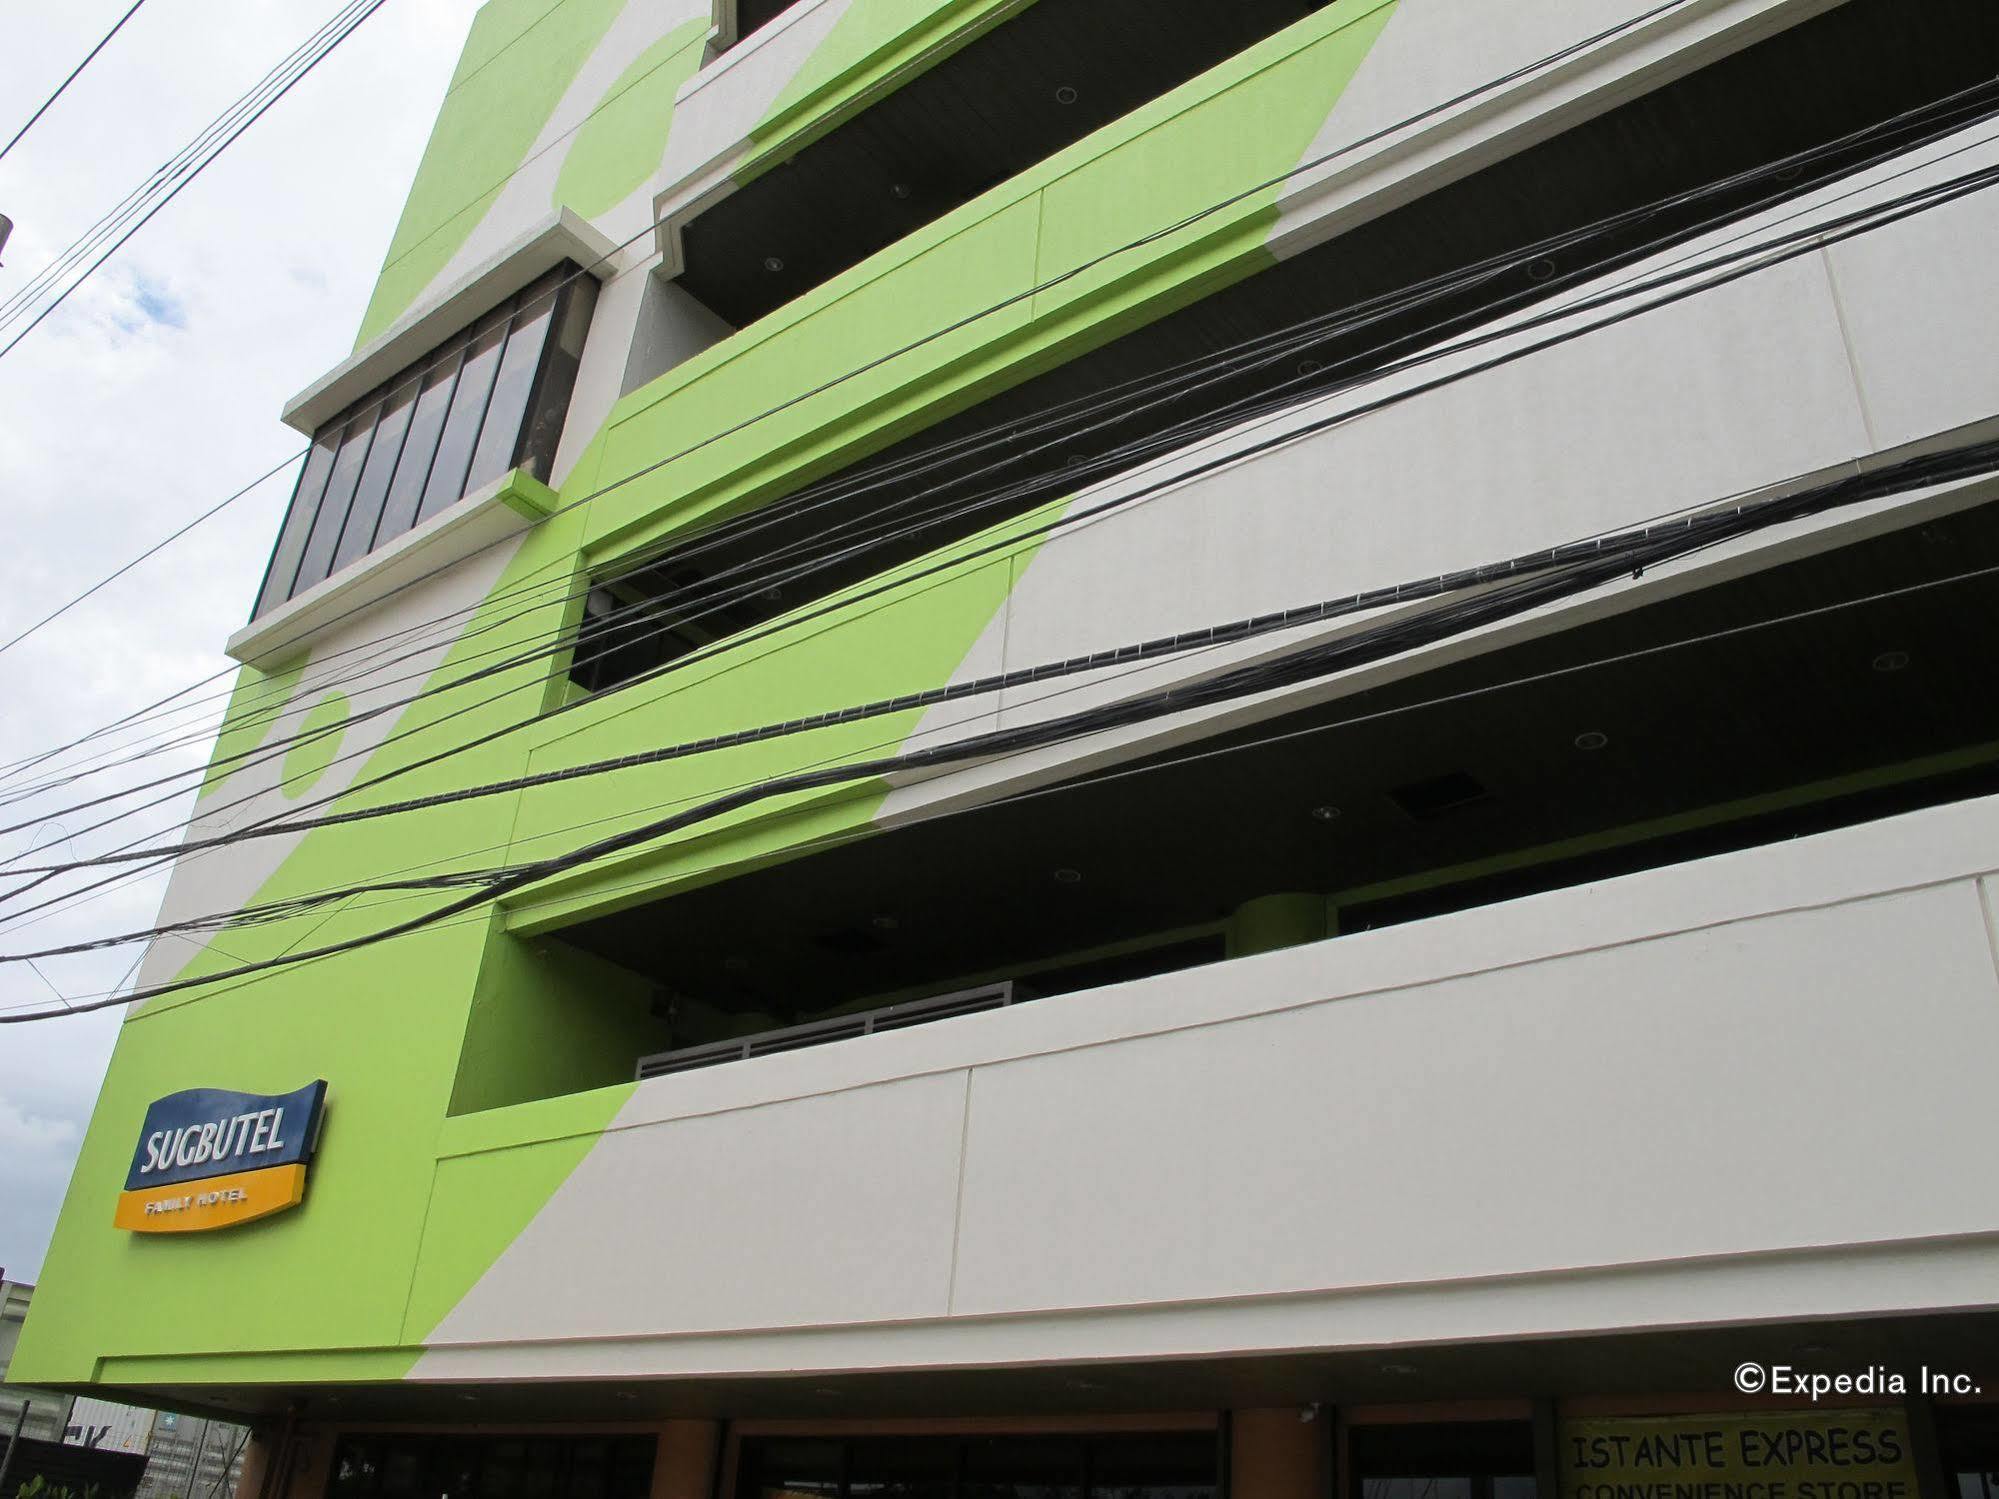 Sugbutel Family Hotel Cebu Exterior photo